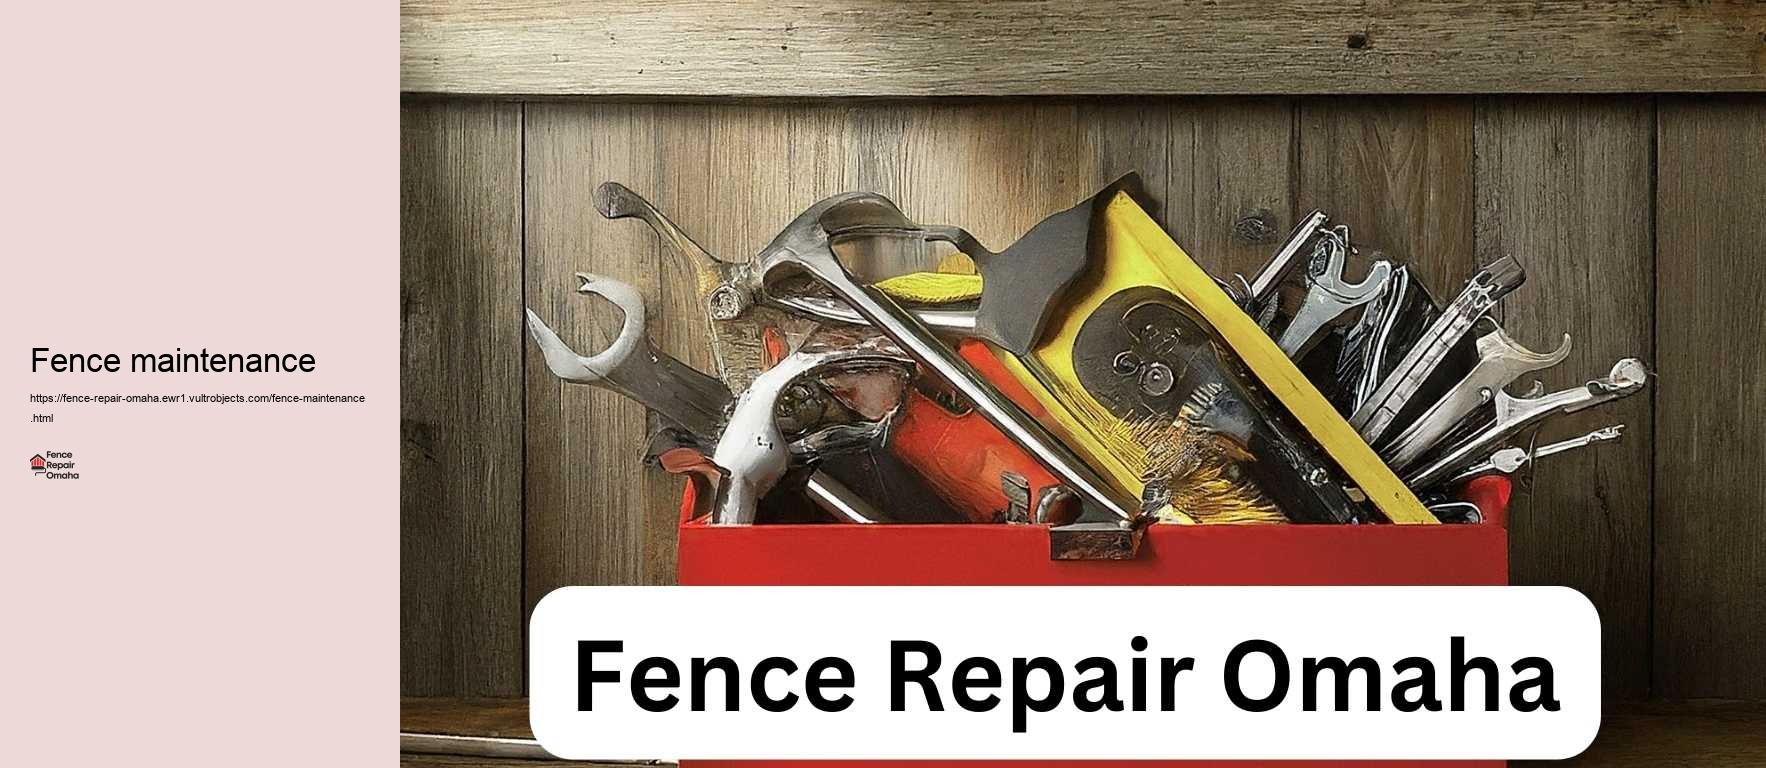 Fence maintenance